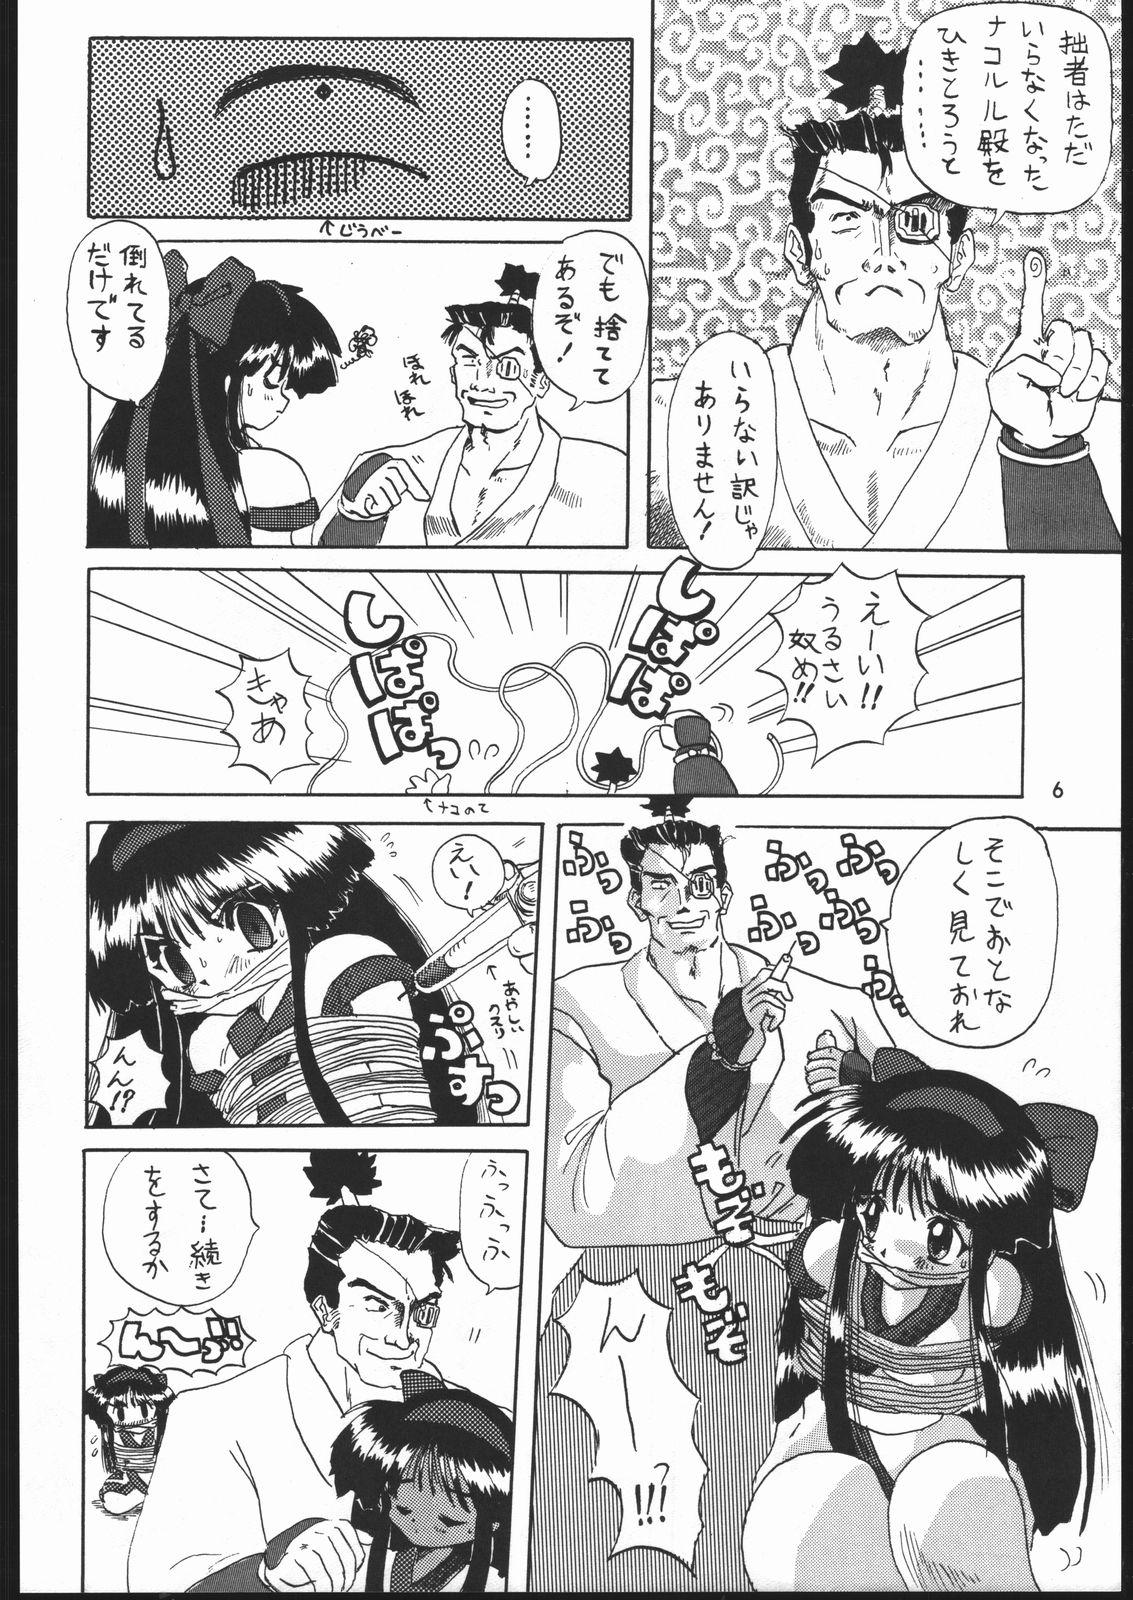 Concha NAKONAKO PARADISE - Samurai spirits Buttfucking - Page 6